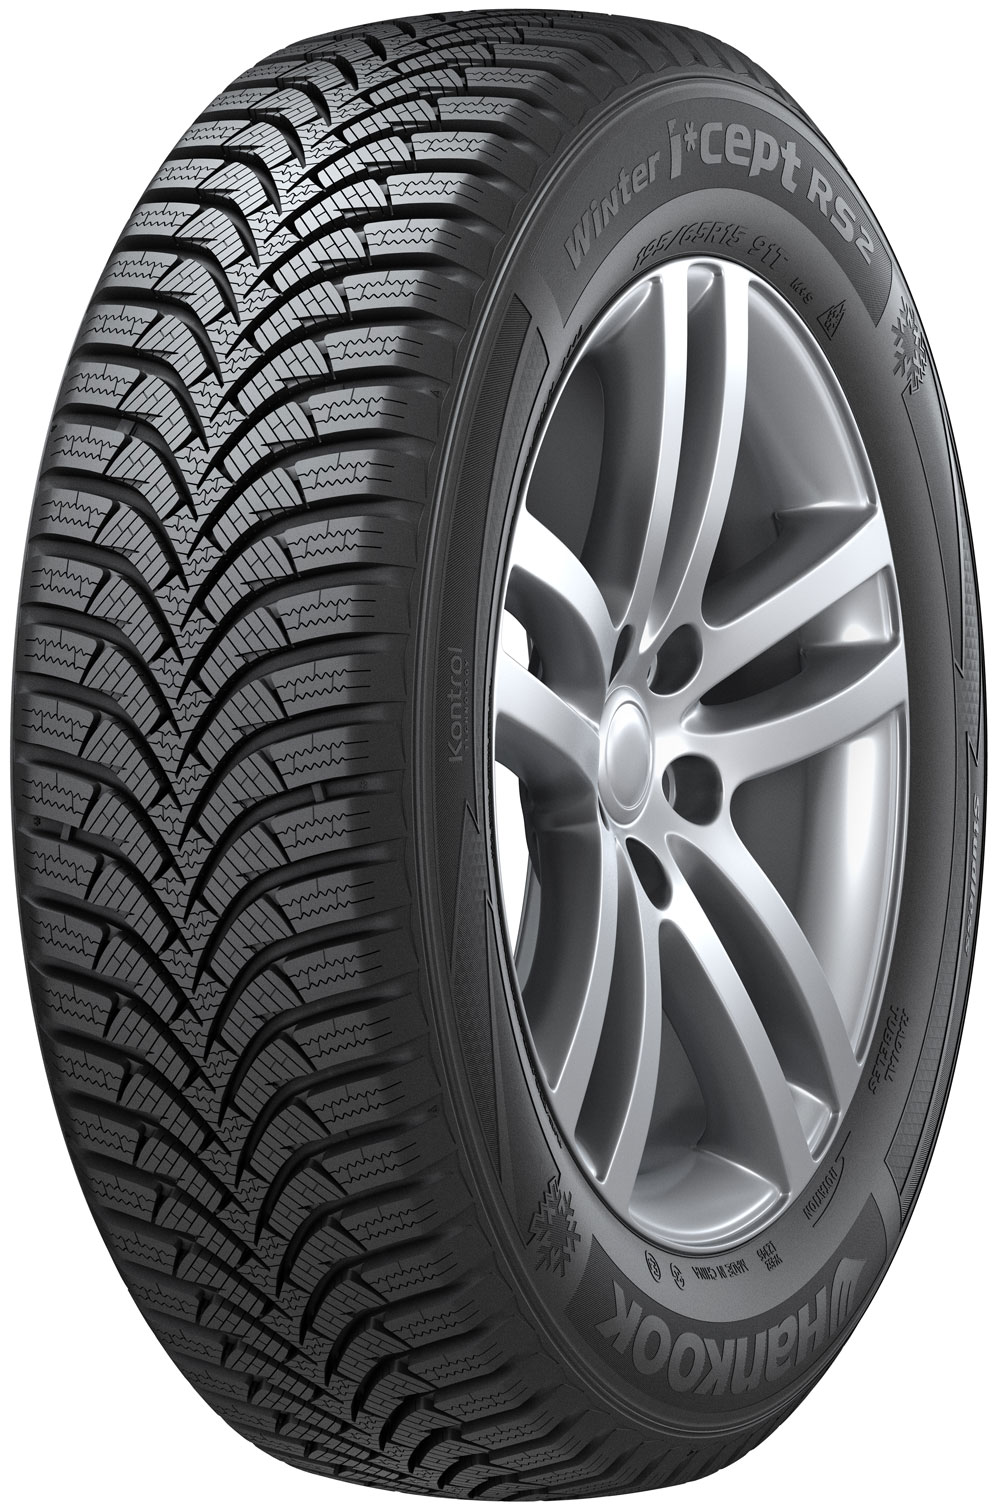 Автомобилни гуми HANKOOK Winter icept RS 2 (W452) BMW 155/65 R14 75T